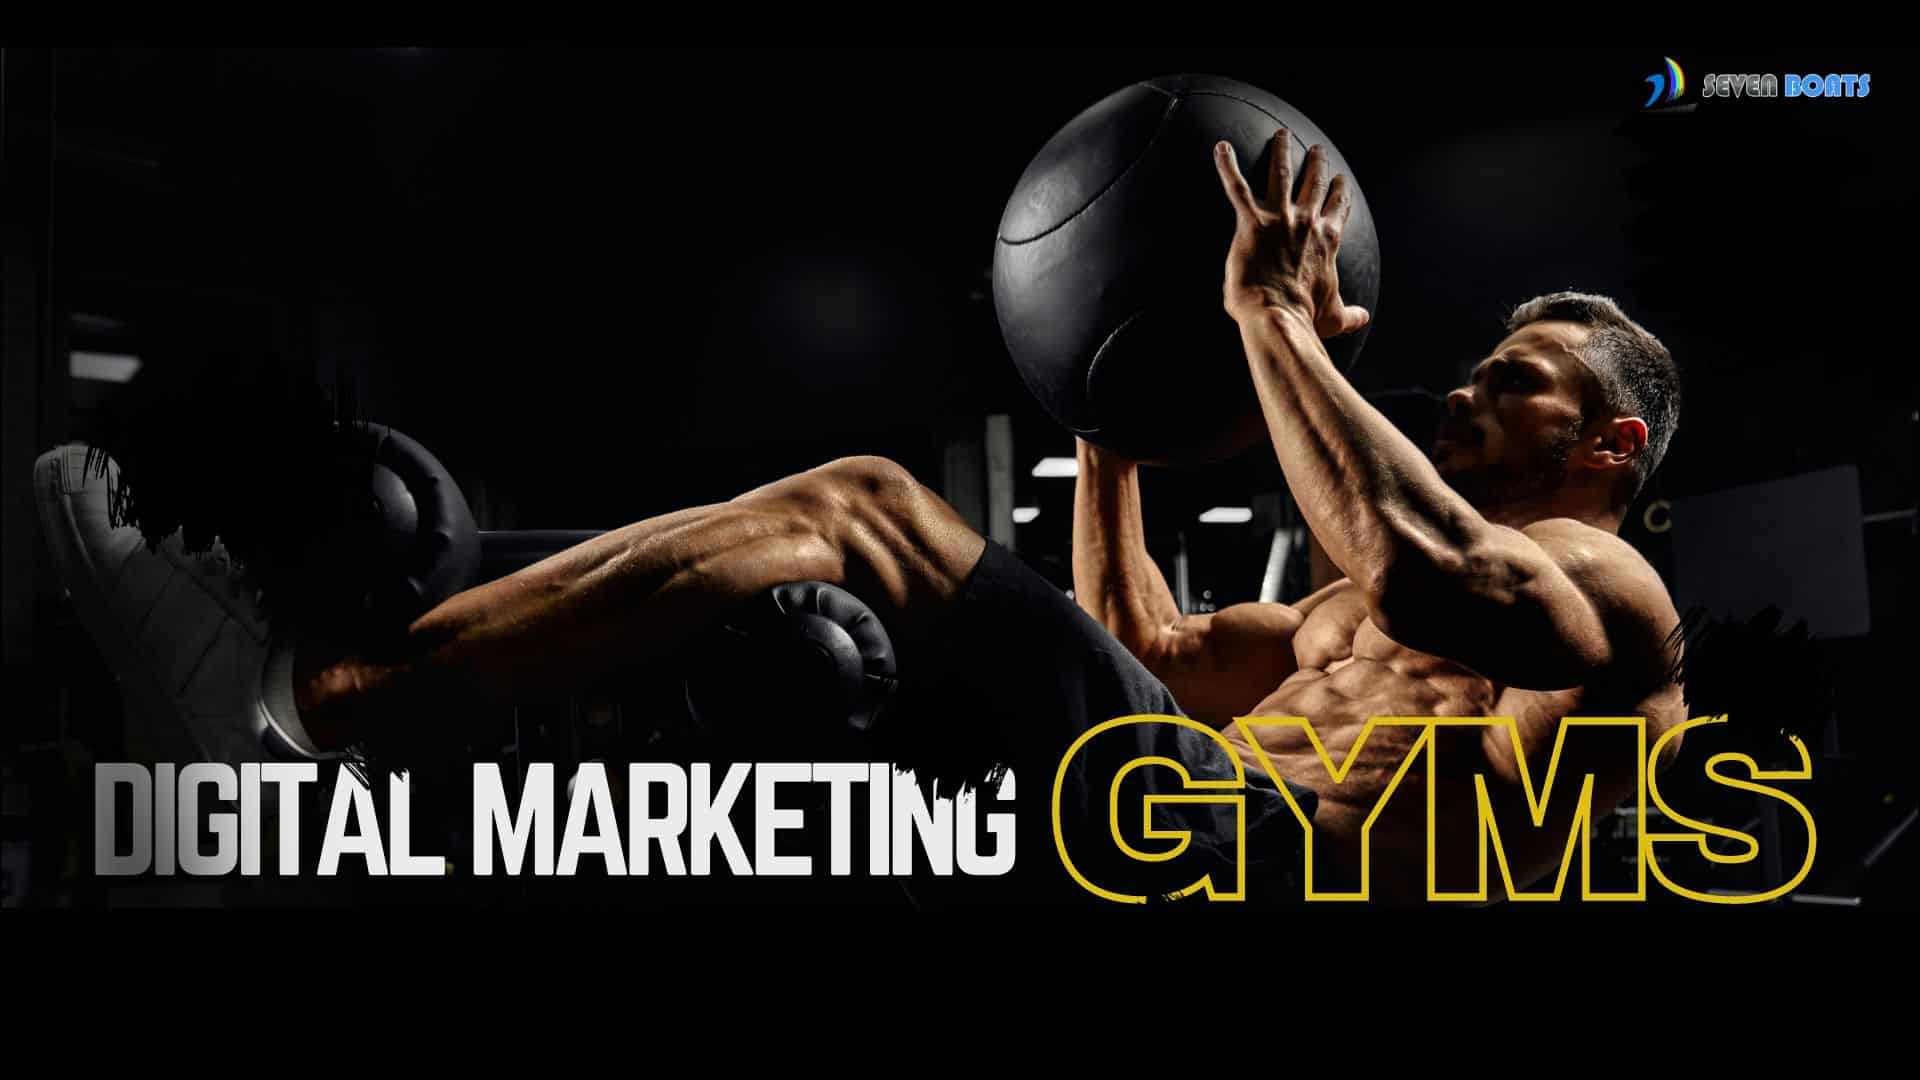 Digital marketing for GYMs